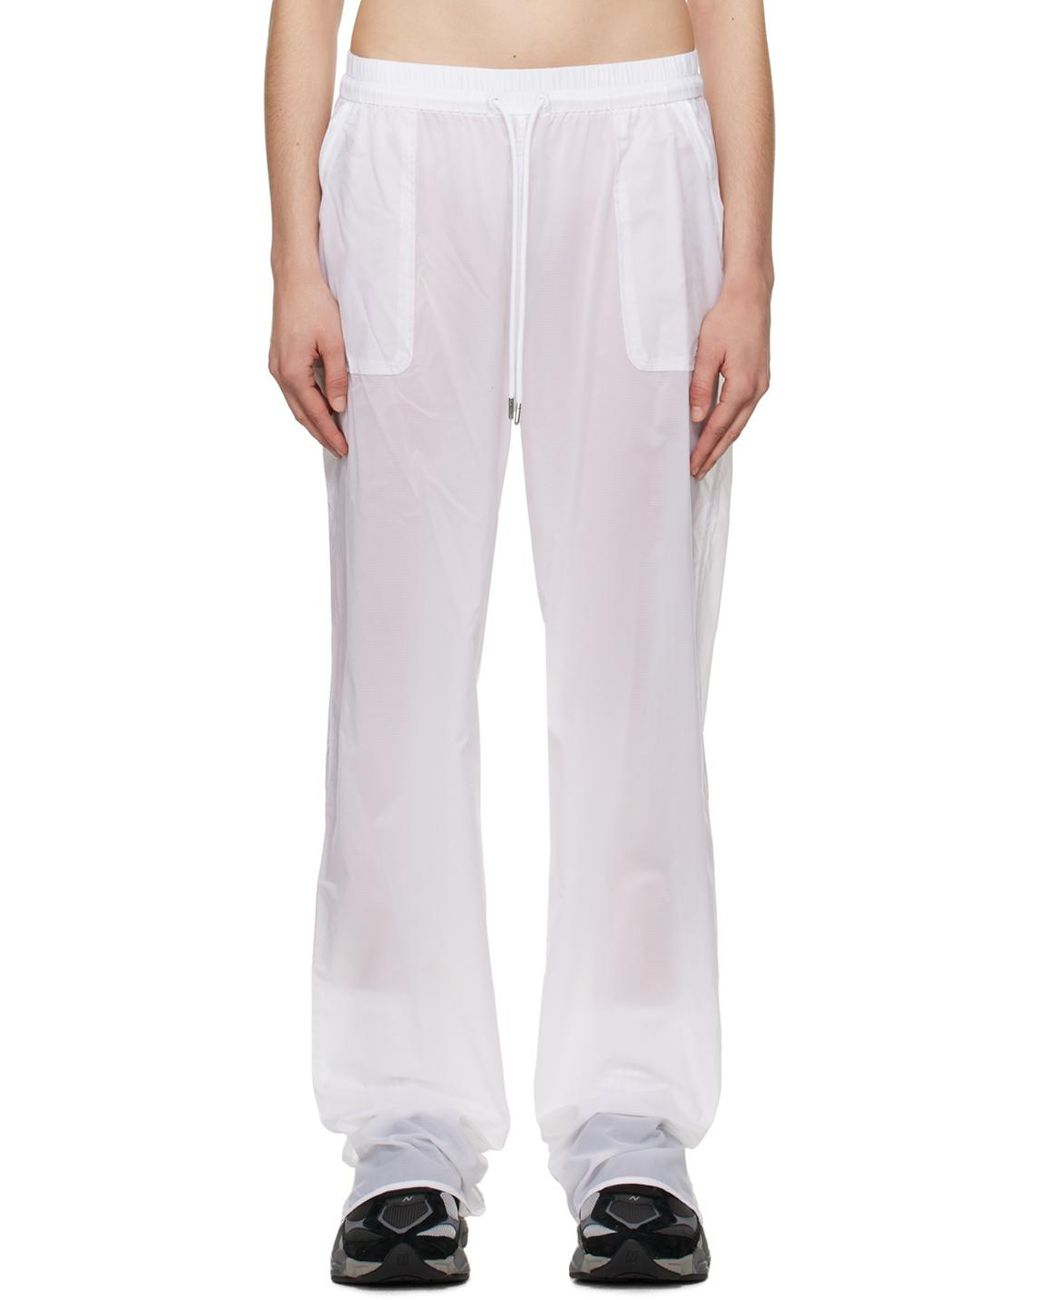 Alo Yoga Cloud Nine Trousers in White